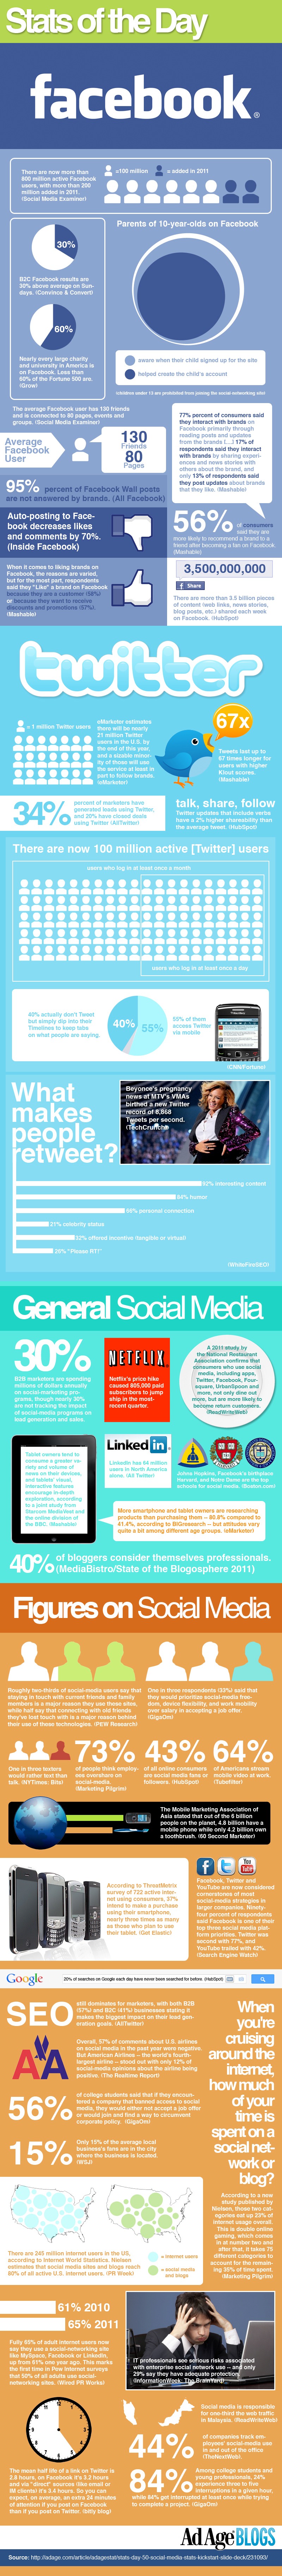 Infographic: Social Media Statistics